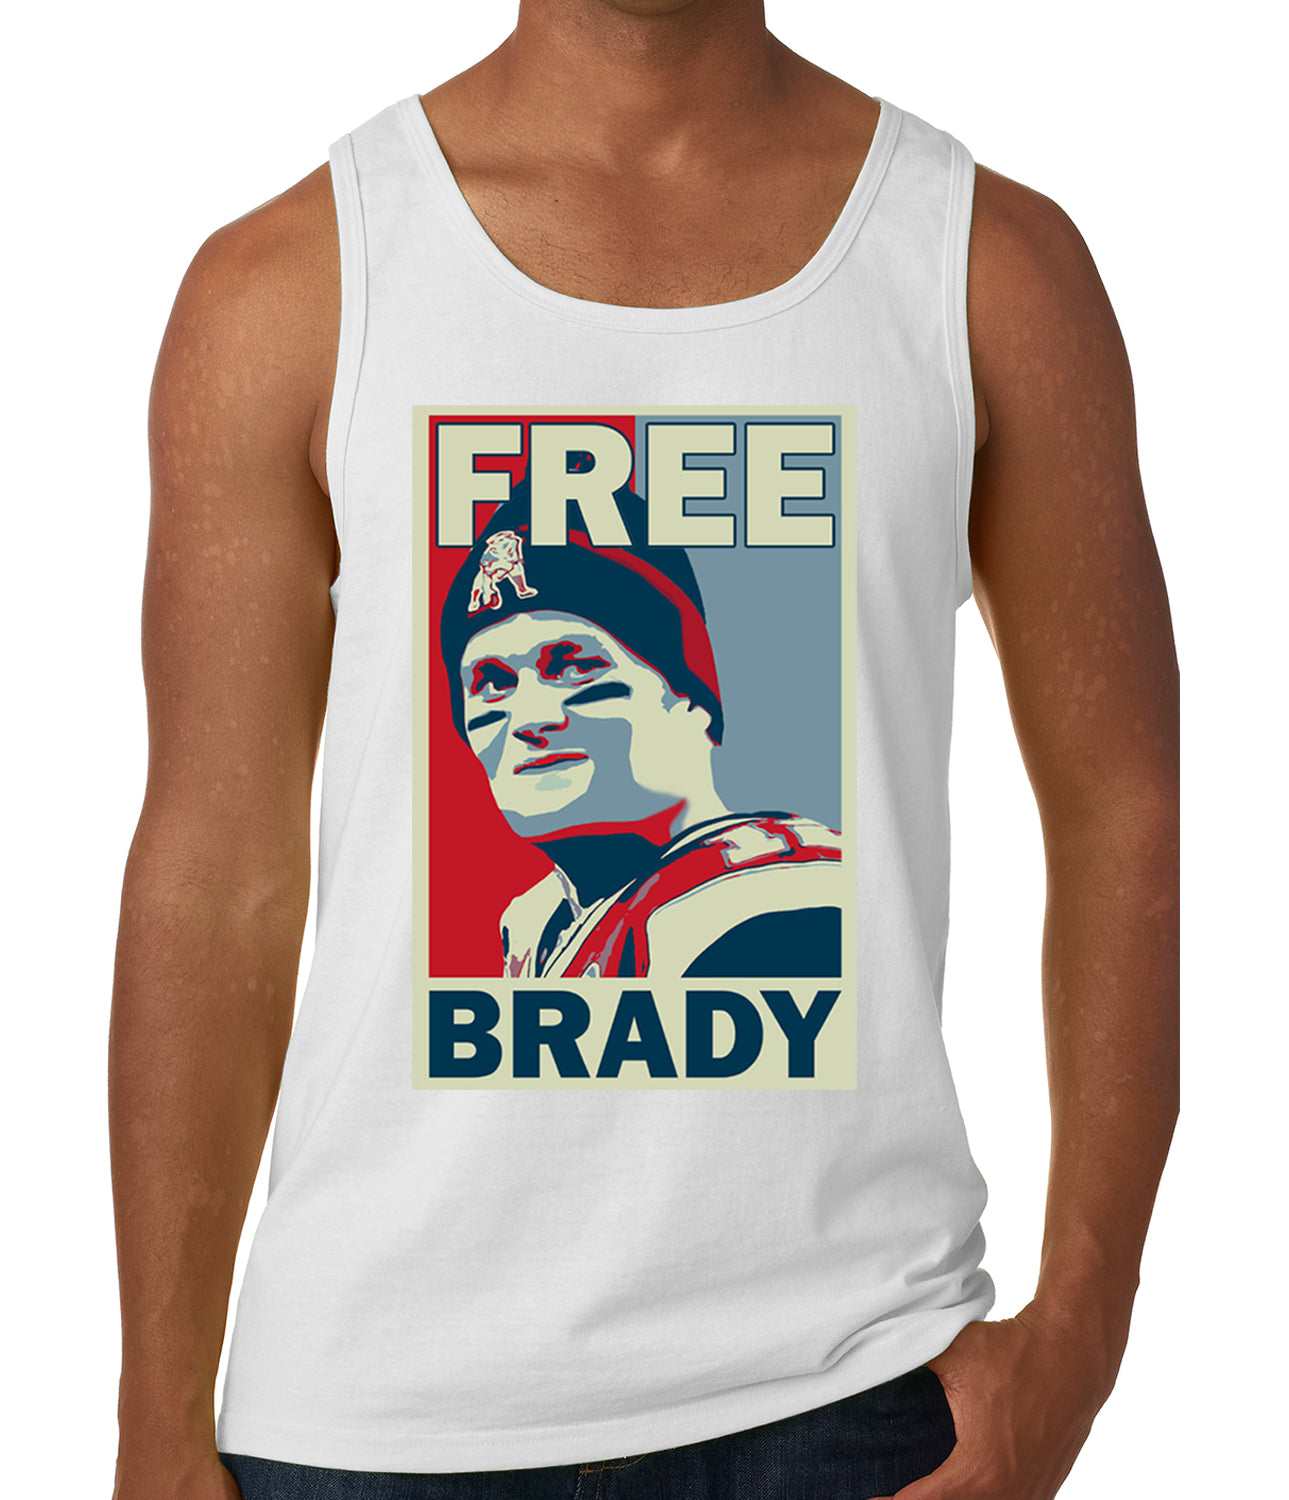 Color Free Brady Deflategate Football Tank Top